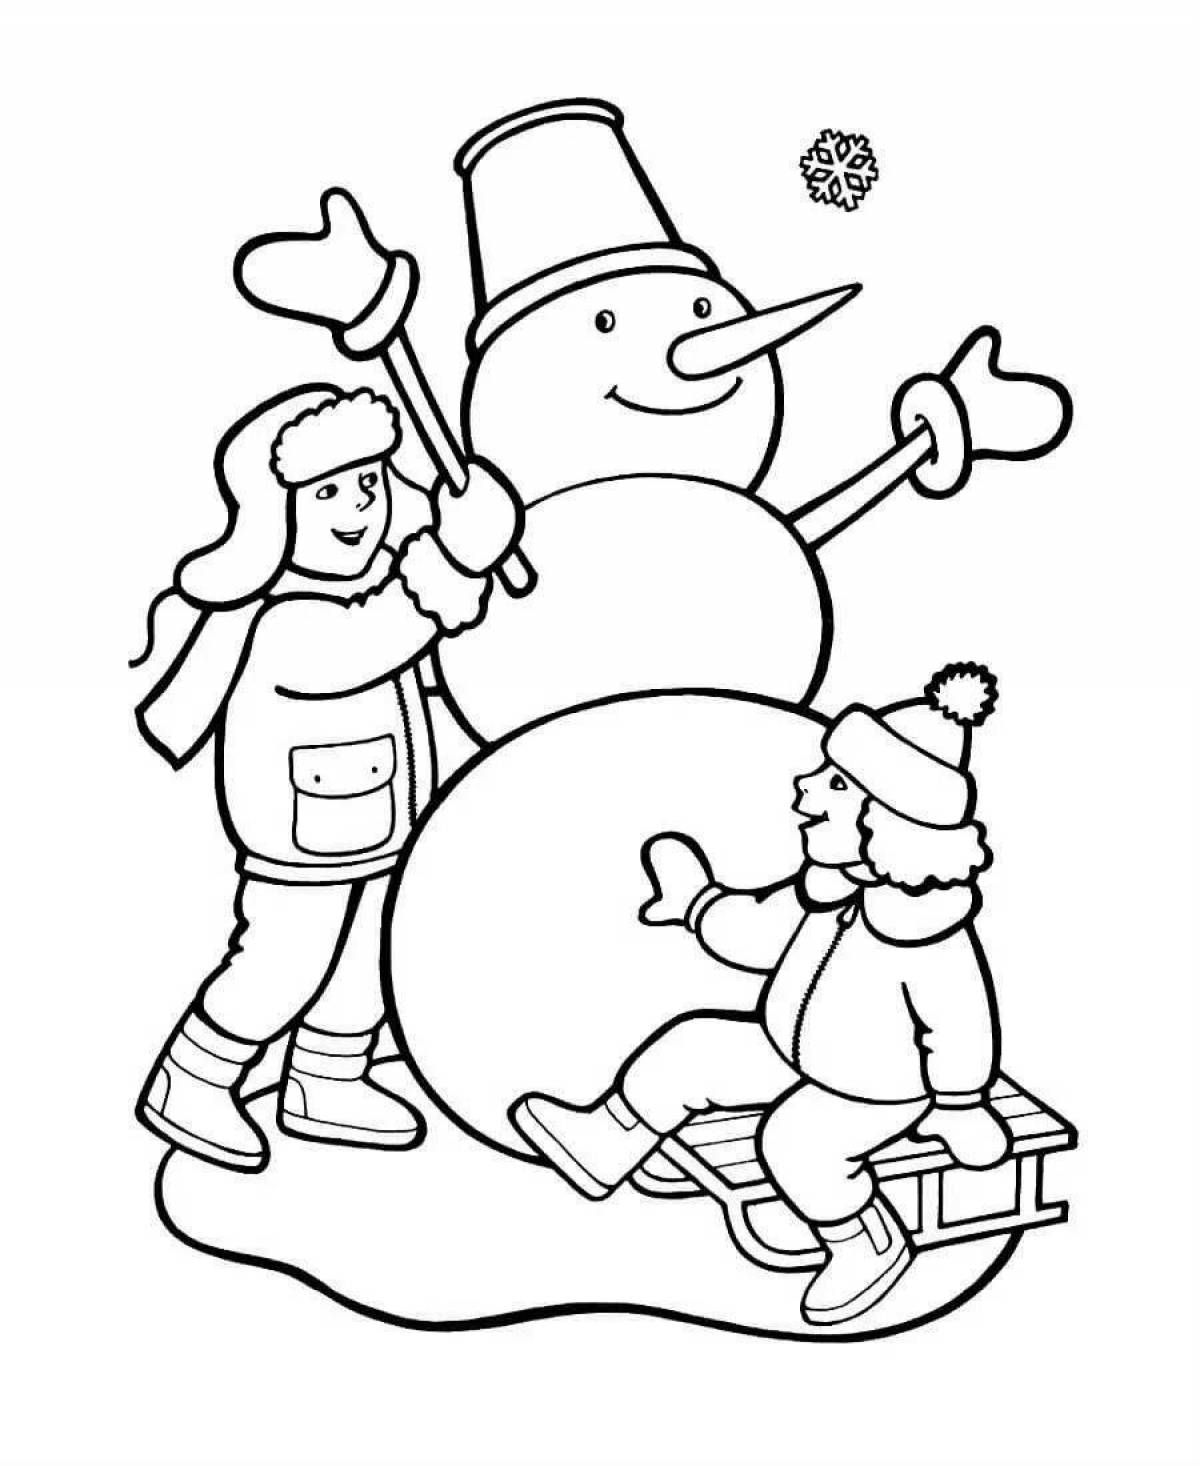 Coloring cute snowman